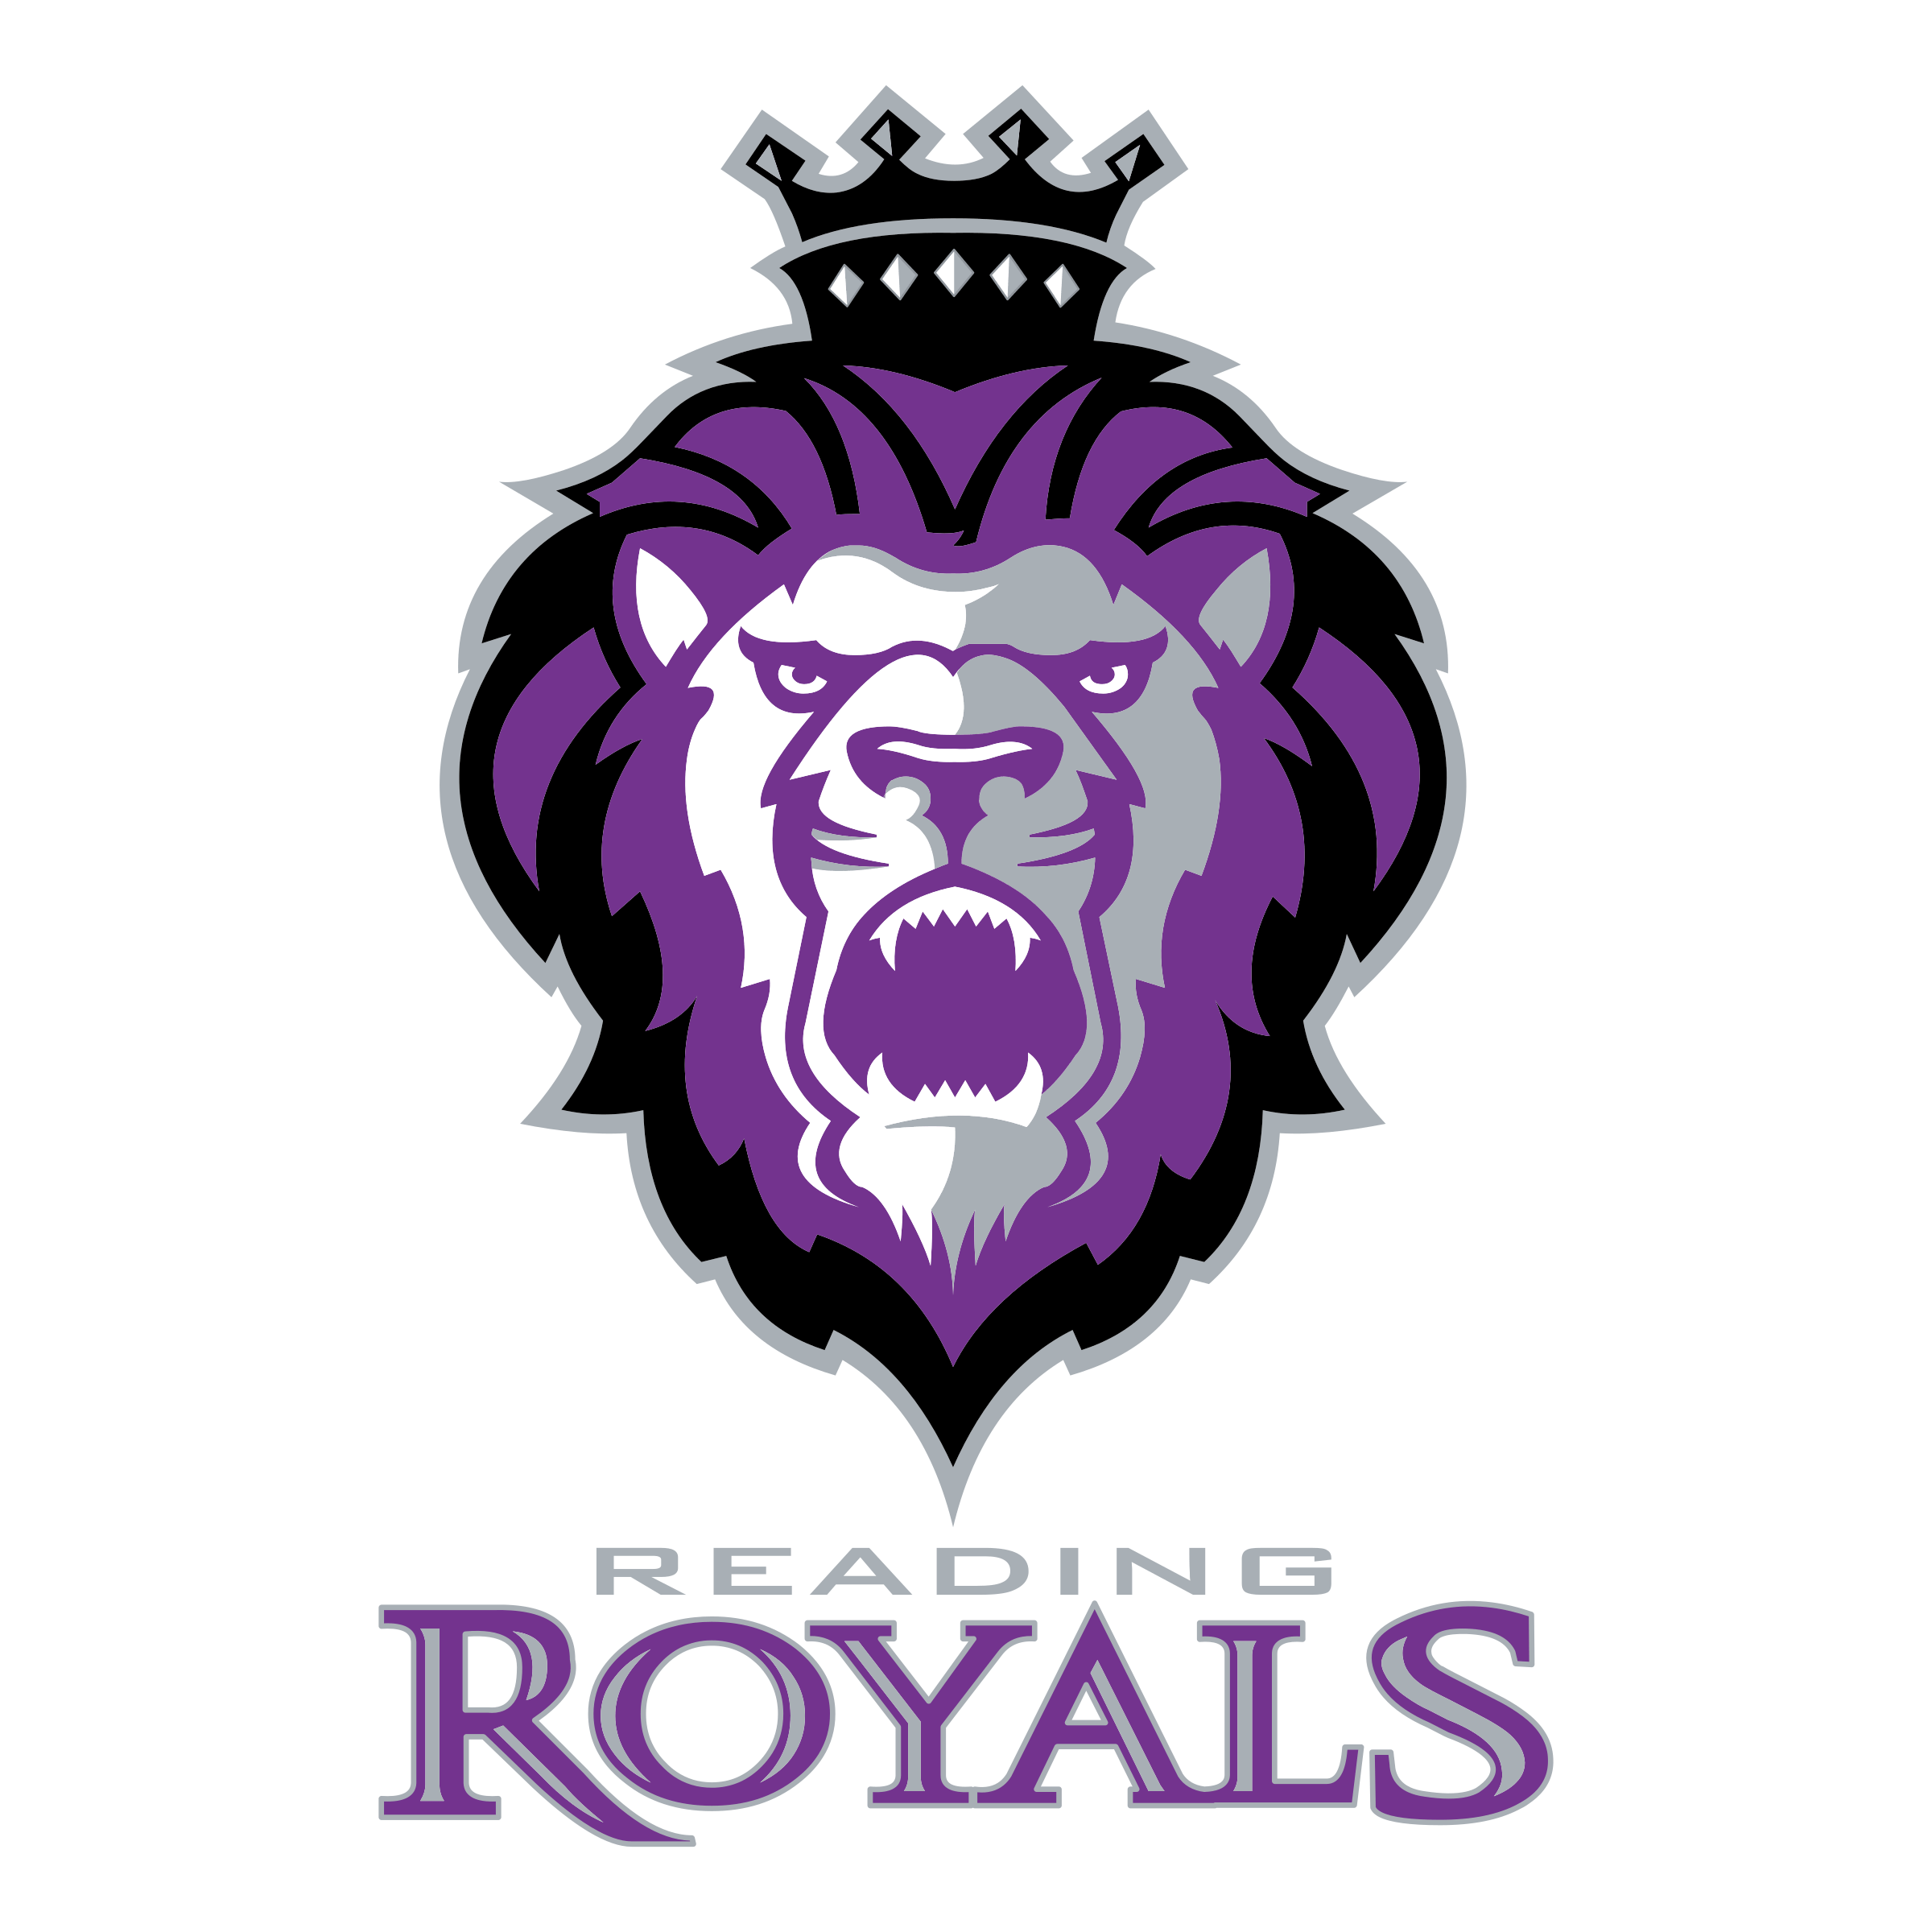 Transparent Royals Logo - Reading Royals Logo PNG Transparent & SVG Vector - Freebie Supply